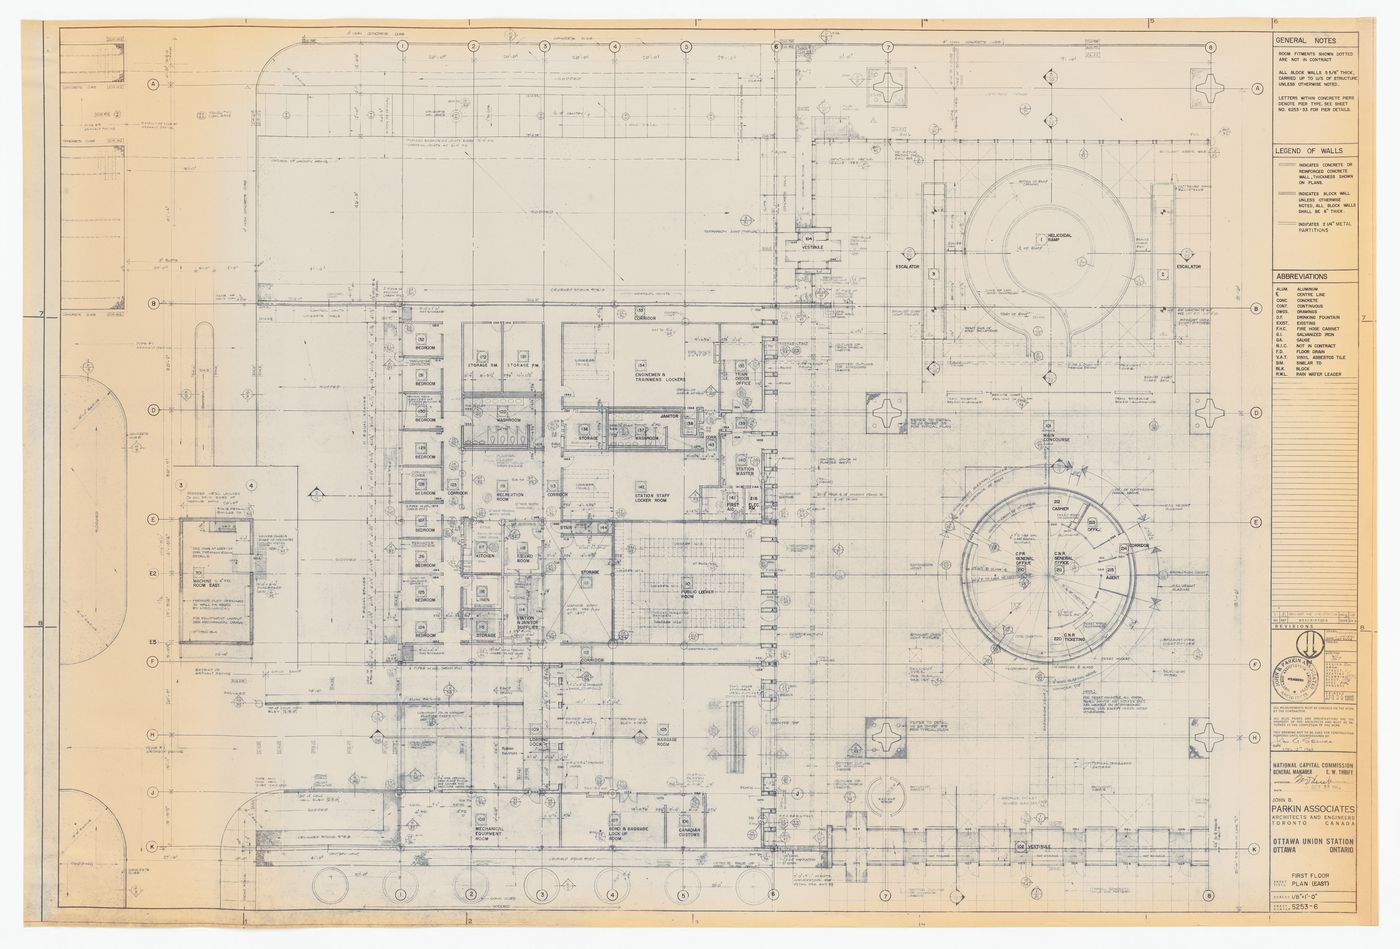 East first floor plan for Ottawa Union Station, Ottawa, Ontario